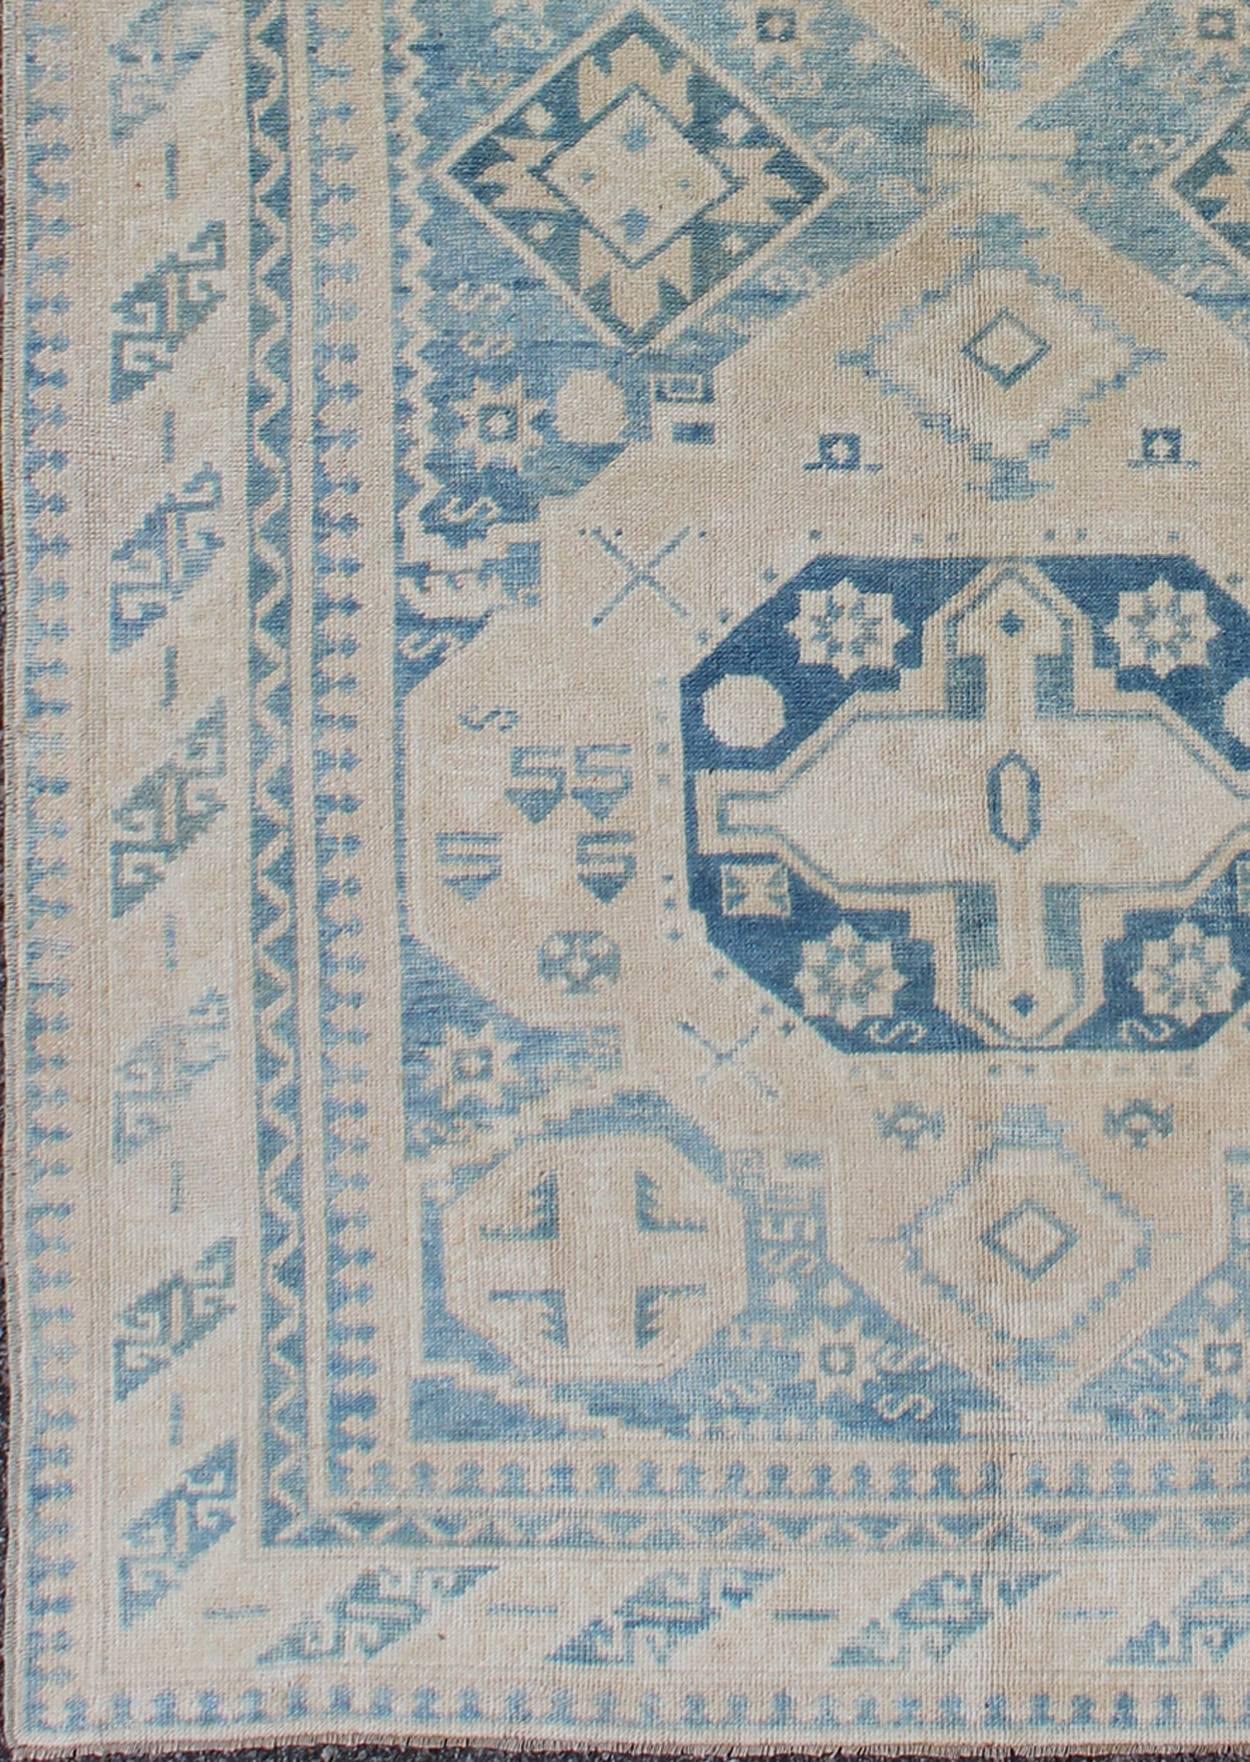 Blue and tan vintage Turkish Oushak rug with geometric dual medallions, rug tu-mtu-136618, country of origin / type: Turkey / Oushak, circa 1940

This vintage Turkish Oushak carpet (circa mid-20th century) features a central Dual-medallion design,